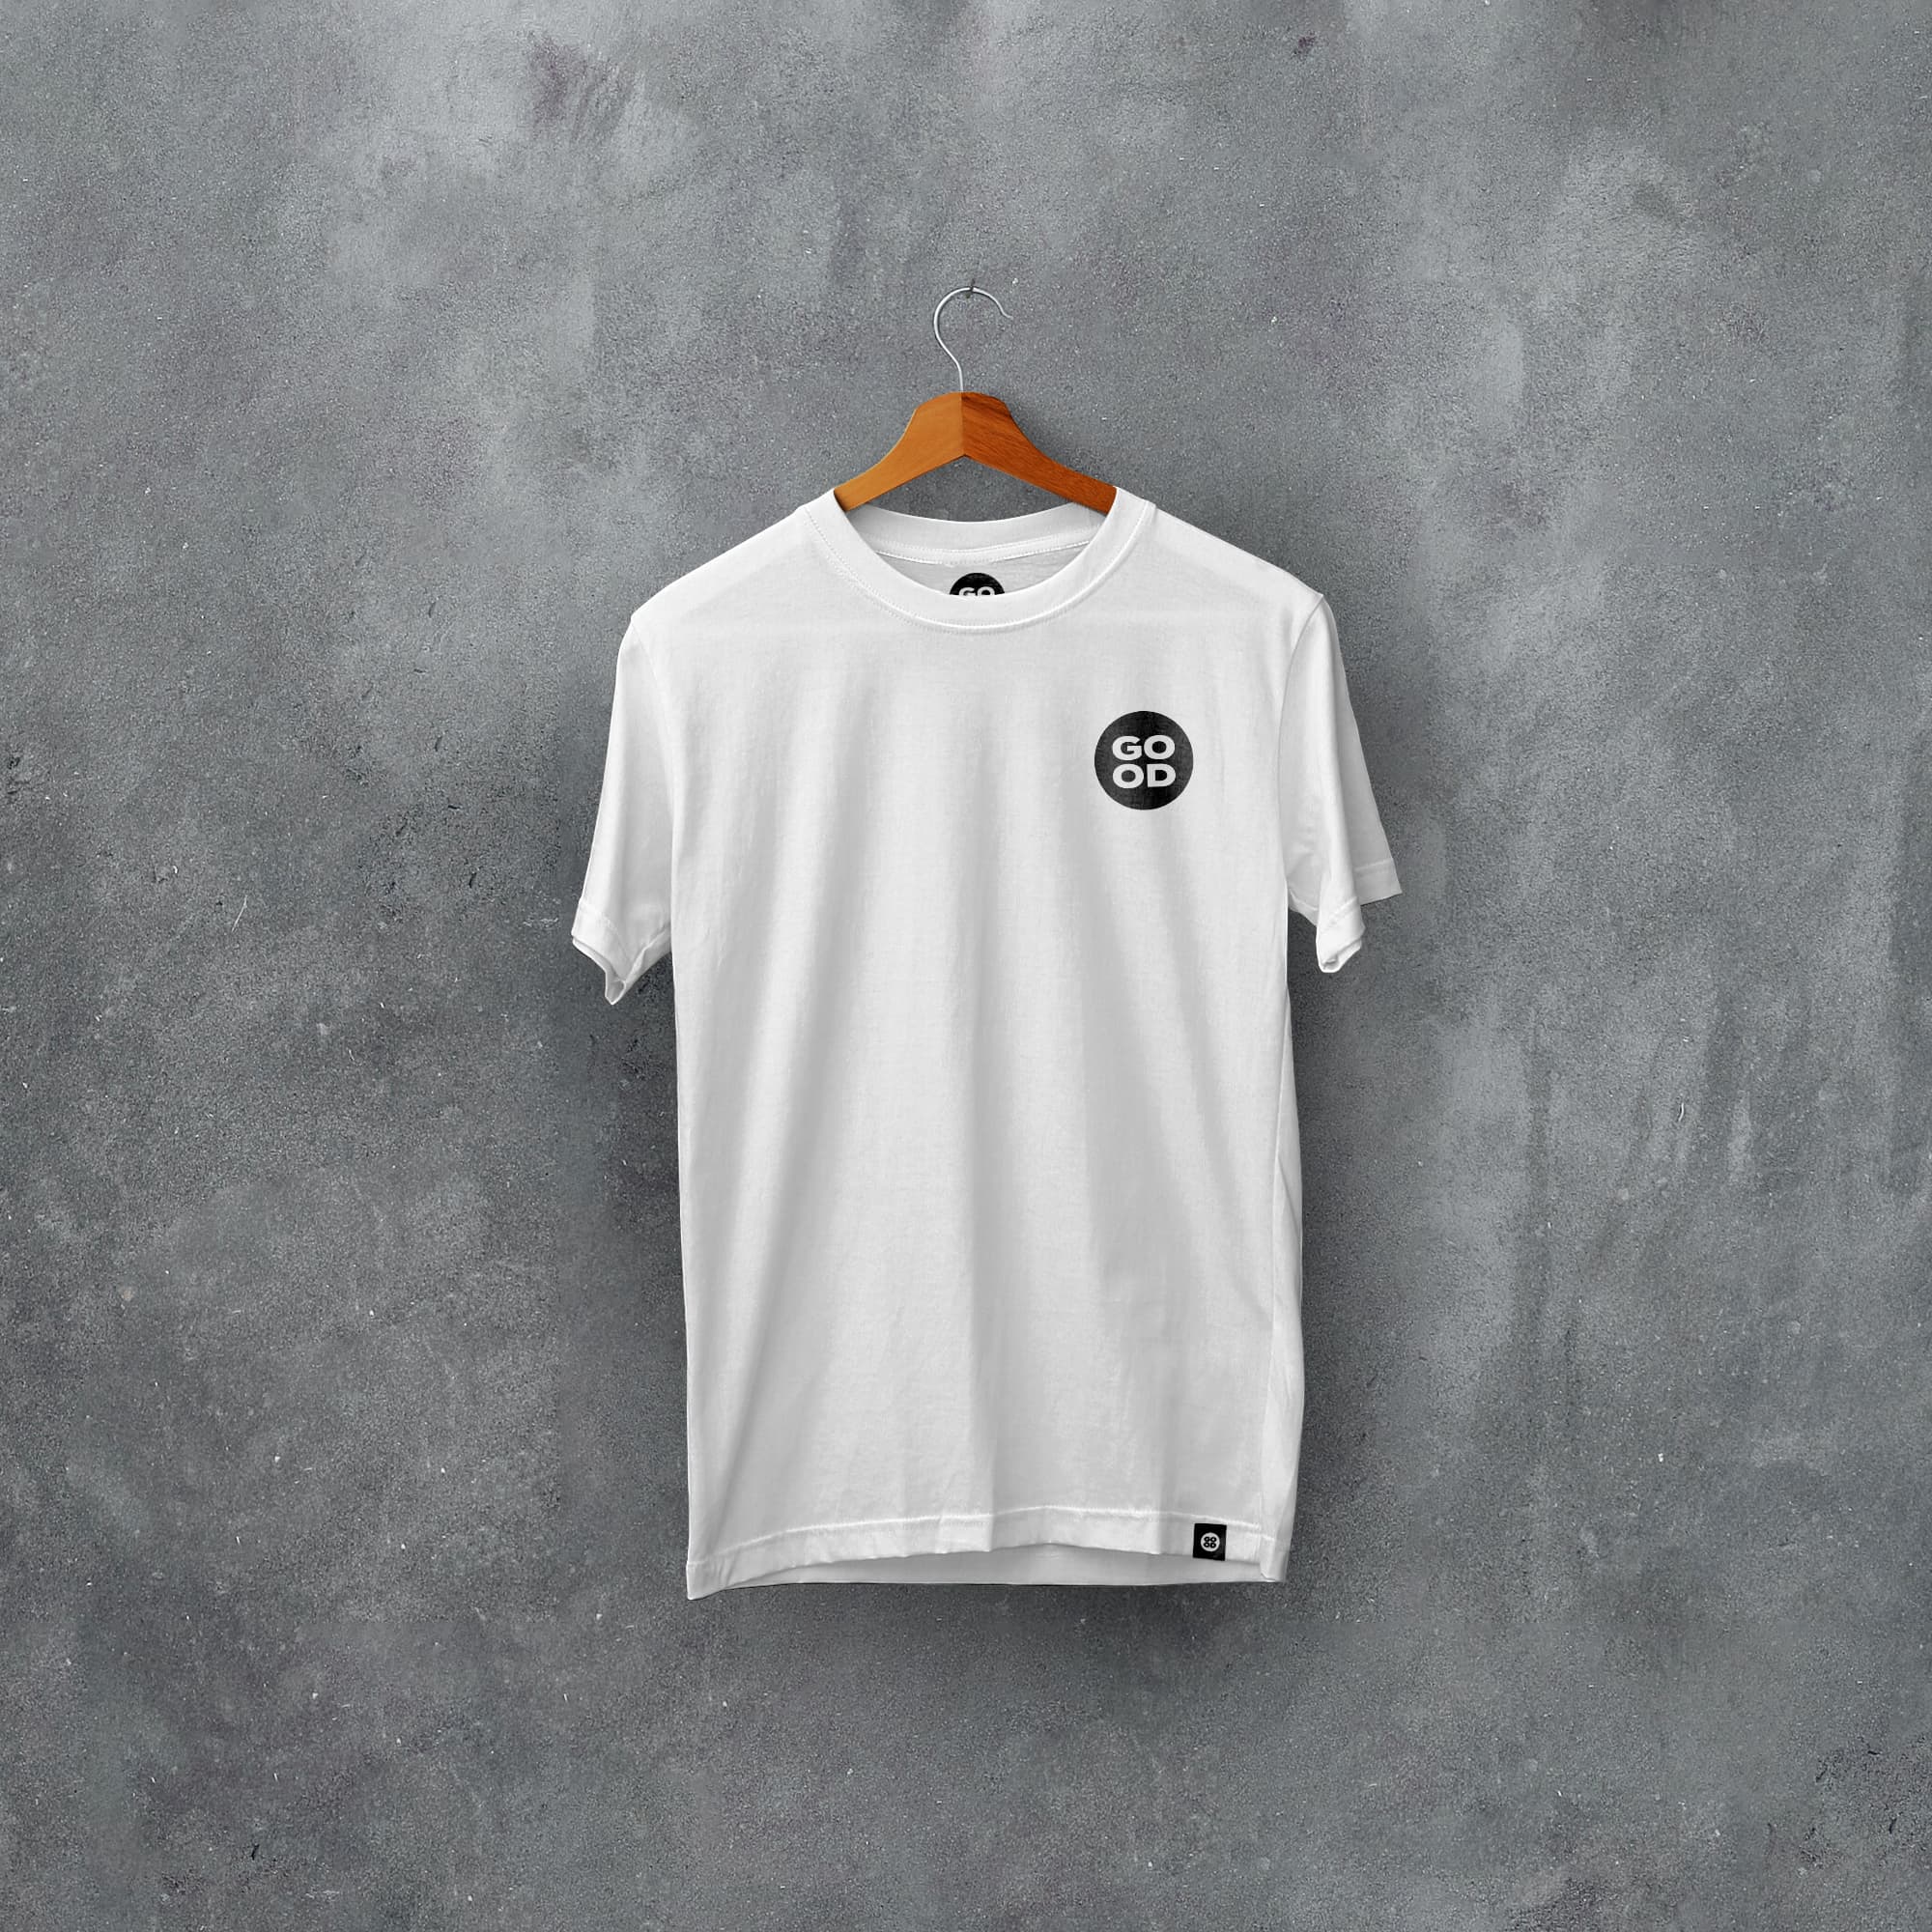 Rushden & Diamonds Classic Kits Football T-Shirt